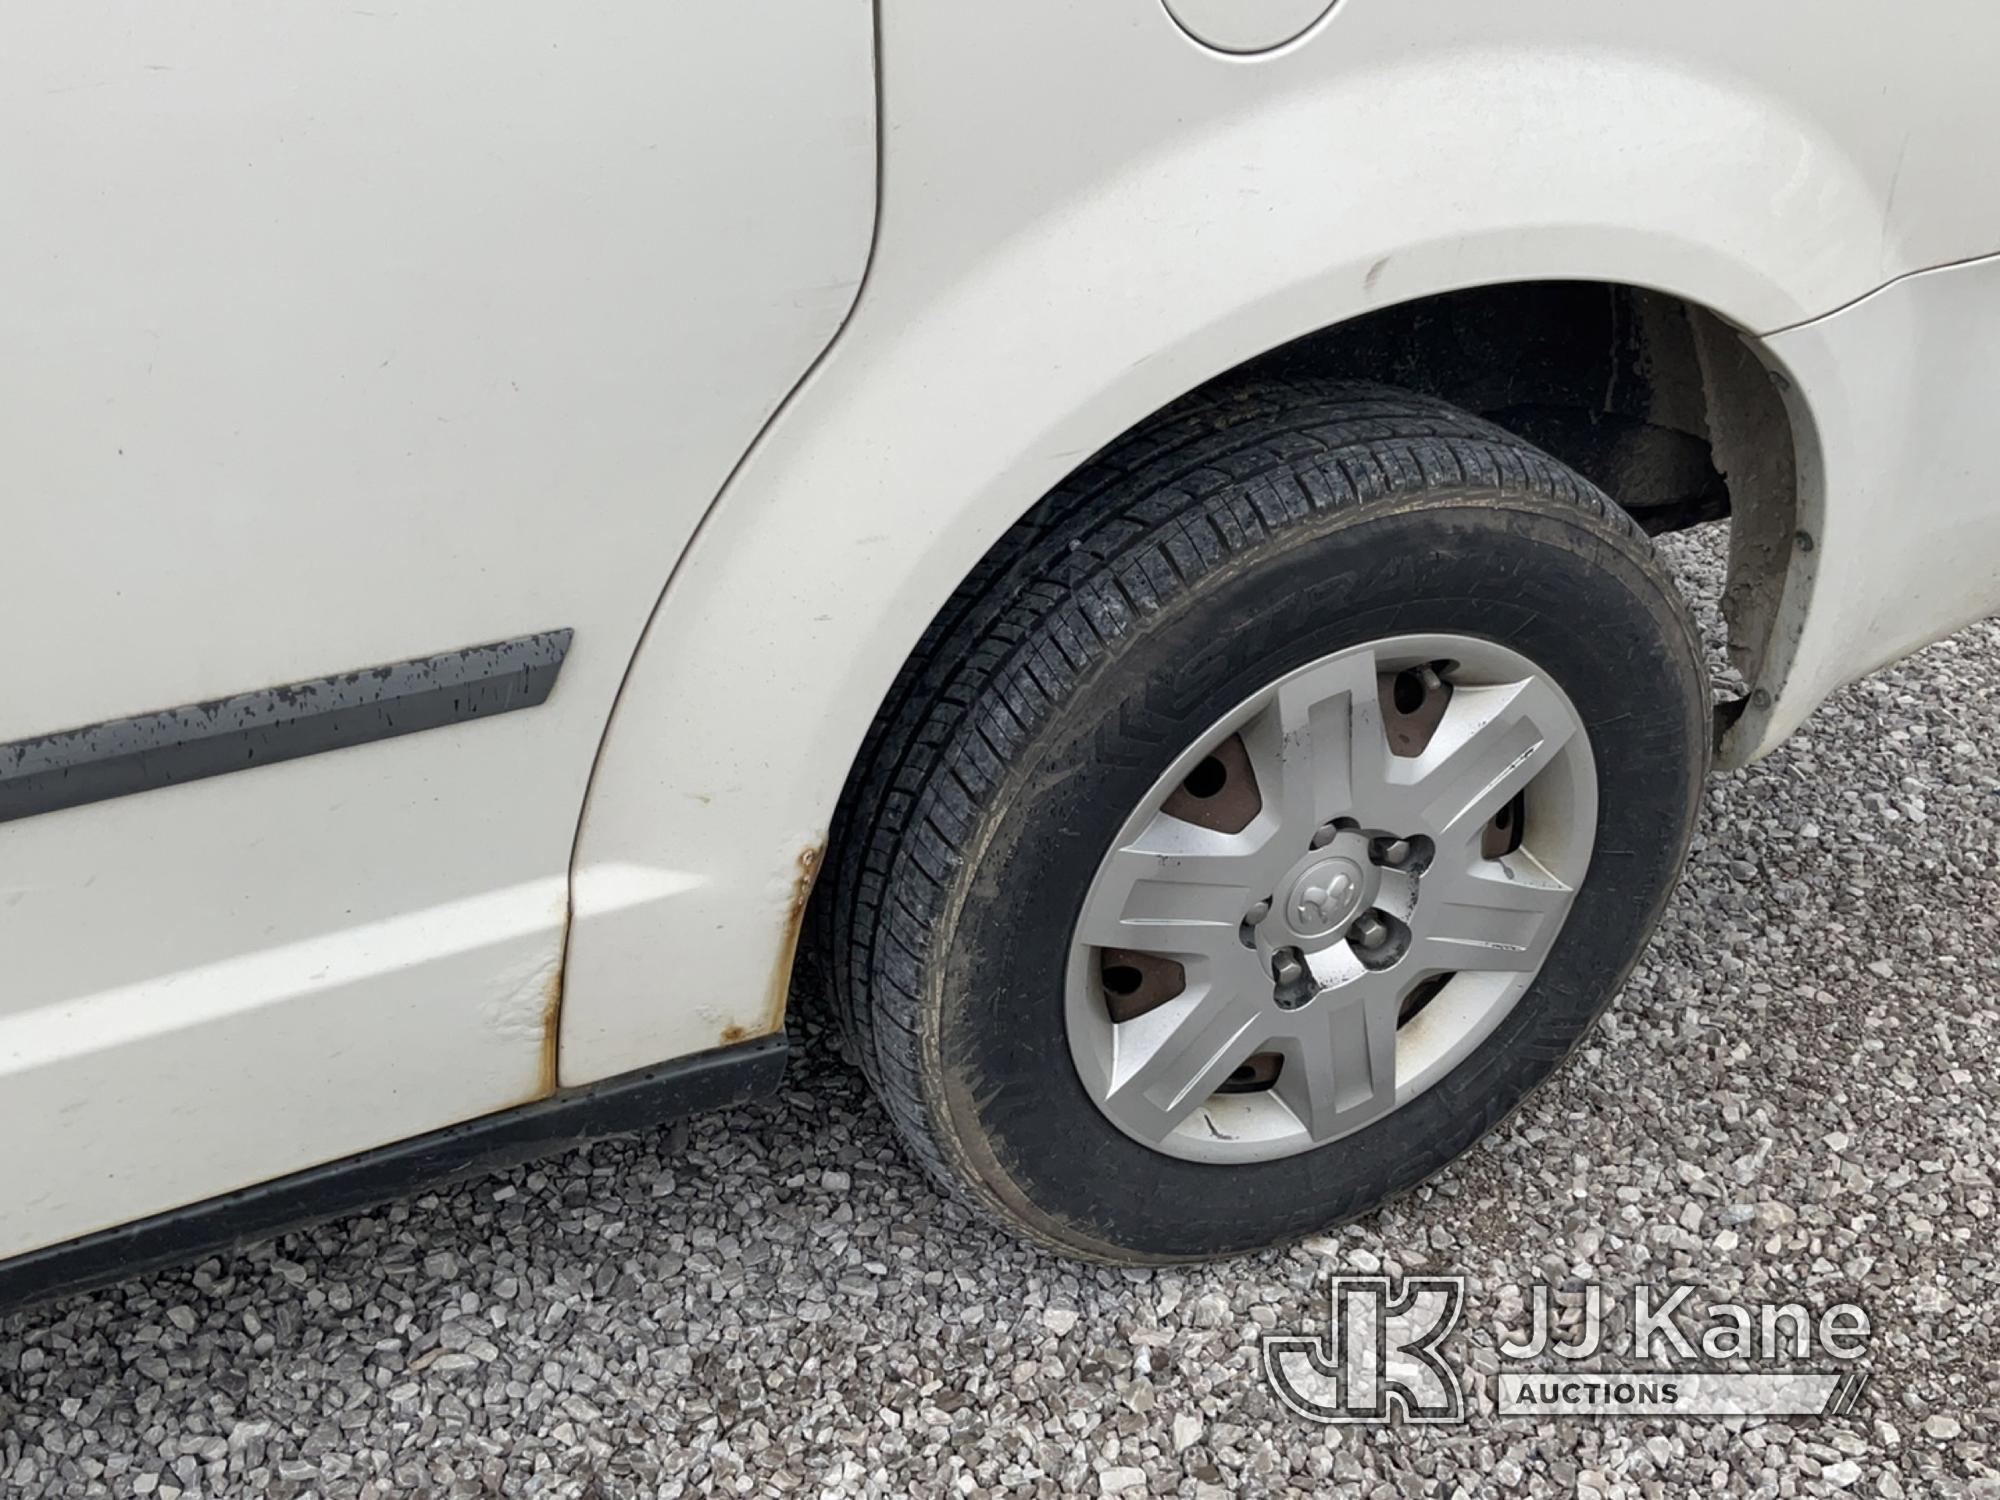 (Verona, KY) 2010 Dodge Grand Caravan Van Runs & Moves) (Rust Damage, Exhaust Leak, Shifter Knob Mis